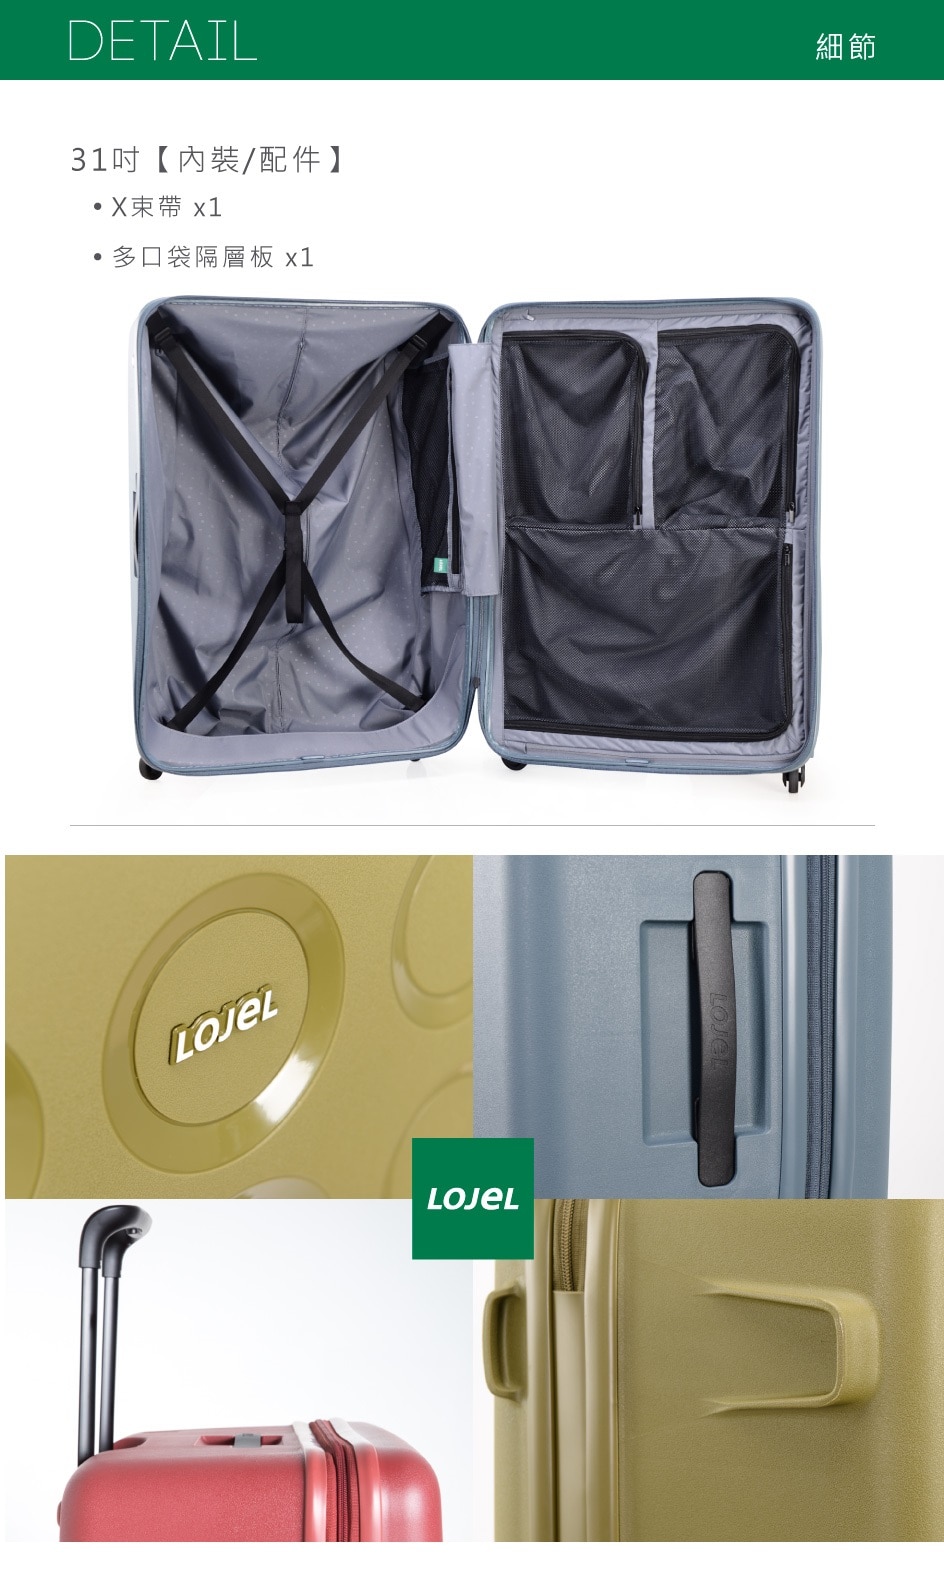 Lojel Vita 硬殼拉鏈行李箱 32 吋具有雙層防盜拉鏈、X束帶、多口袋隔層板。